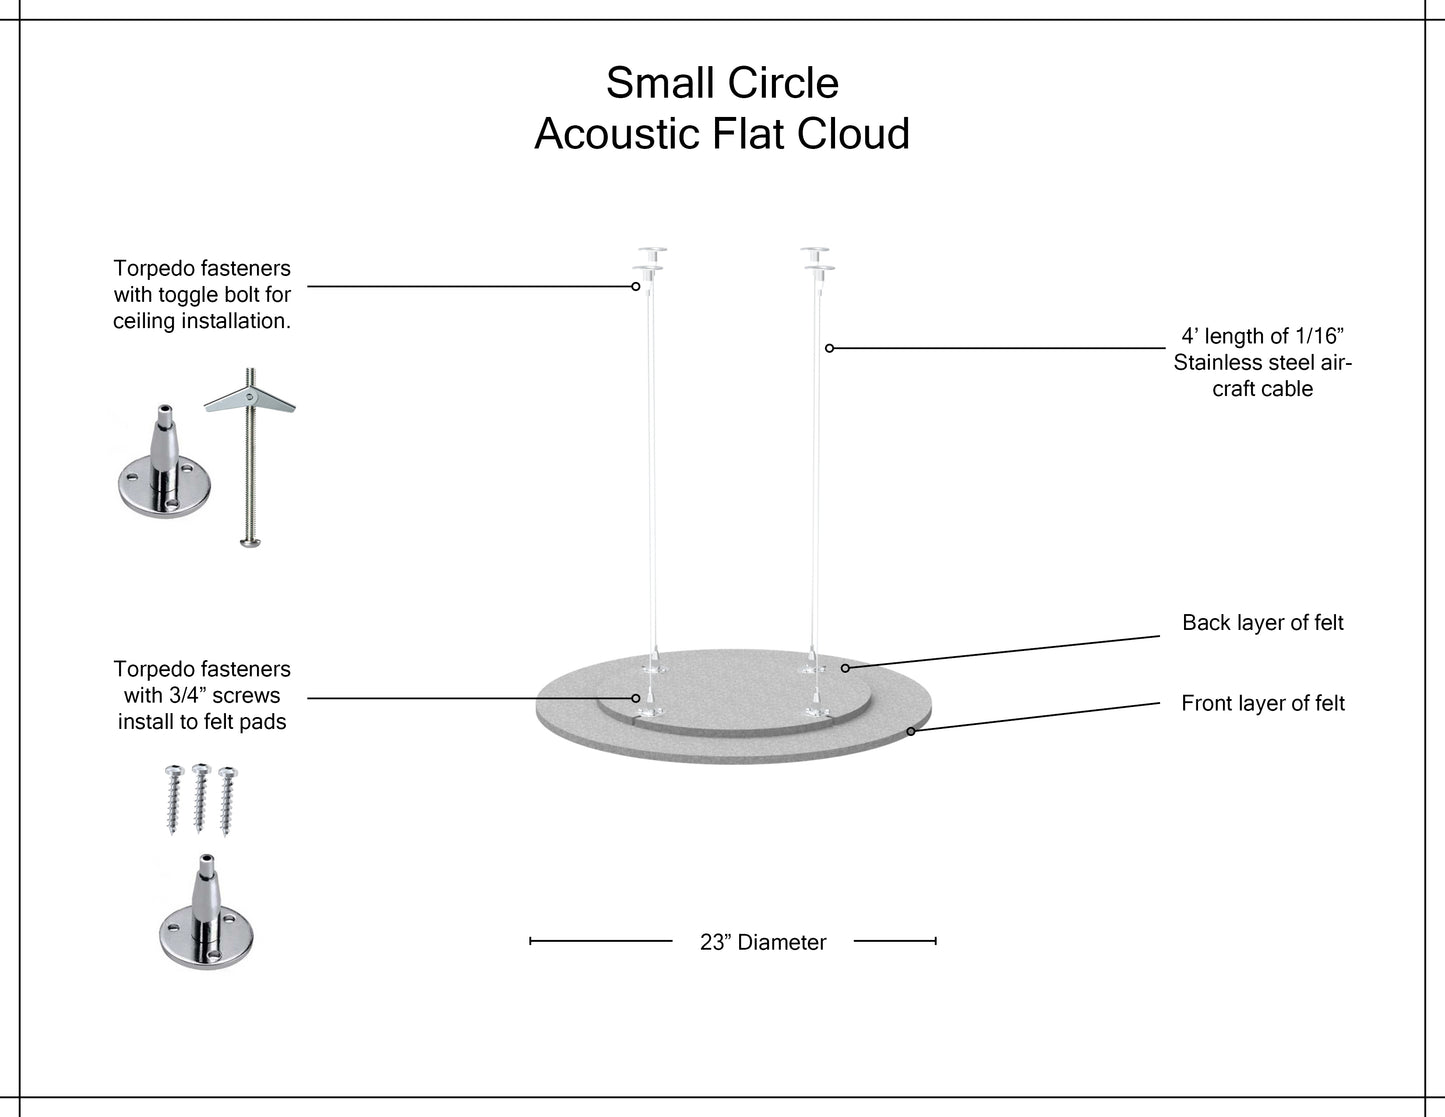 Small Circle Acoustic Flat Cloud